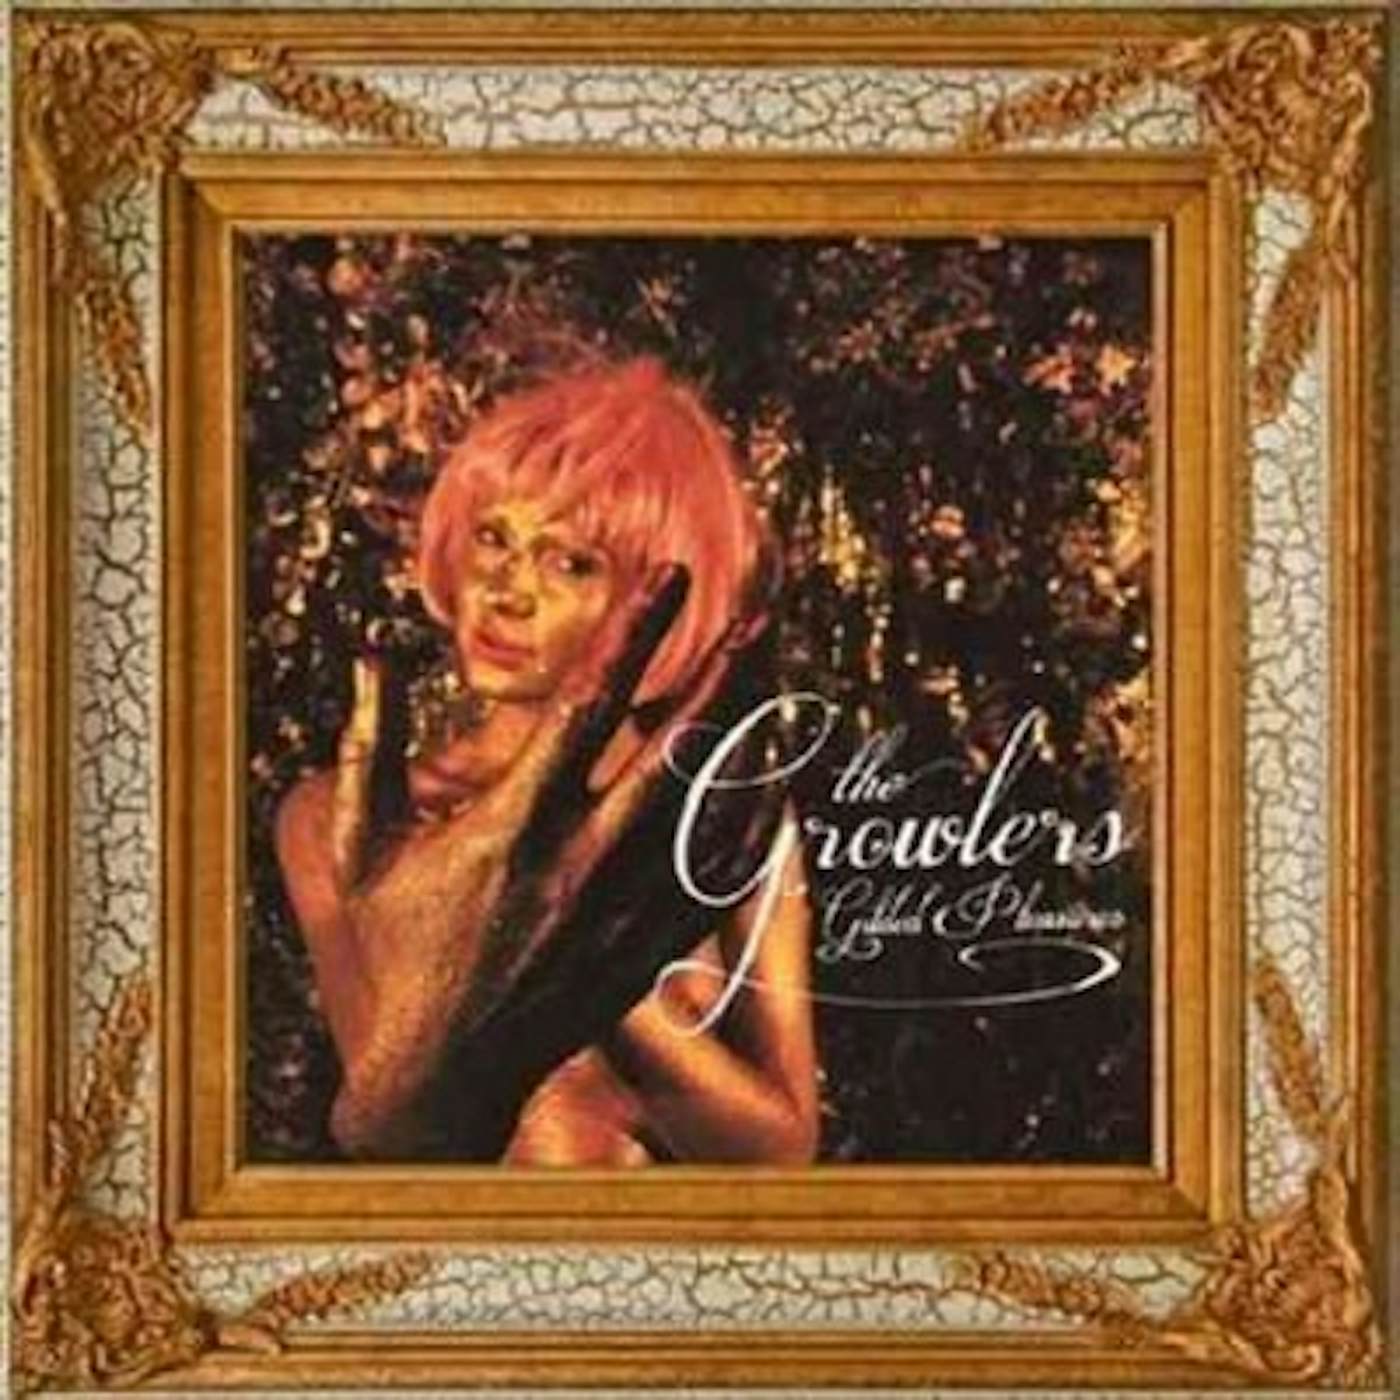 The Growlers Gilded Pleasures Vinyl Record